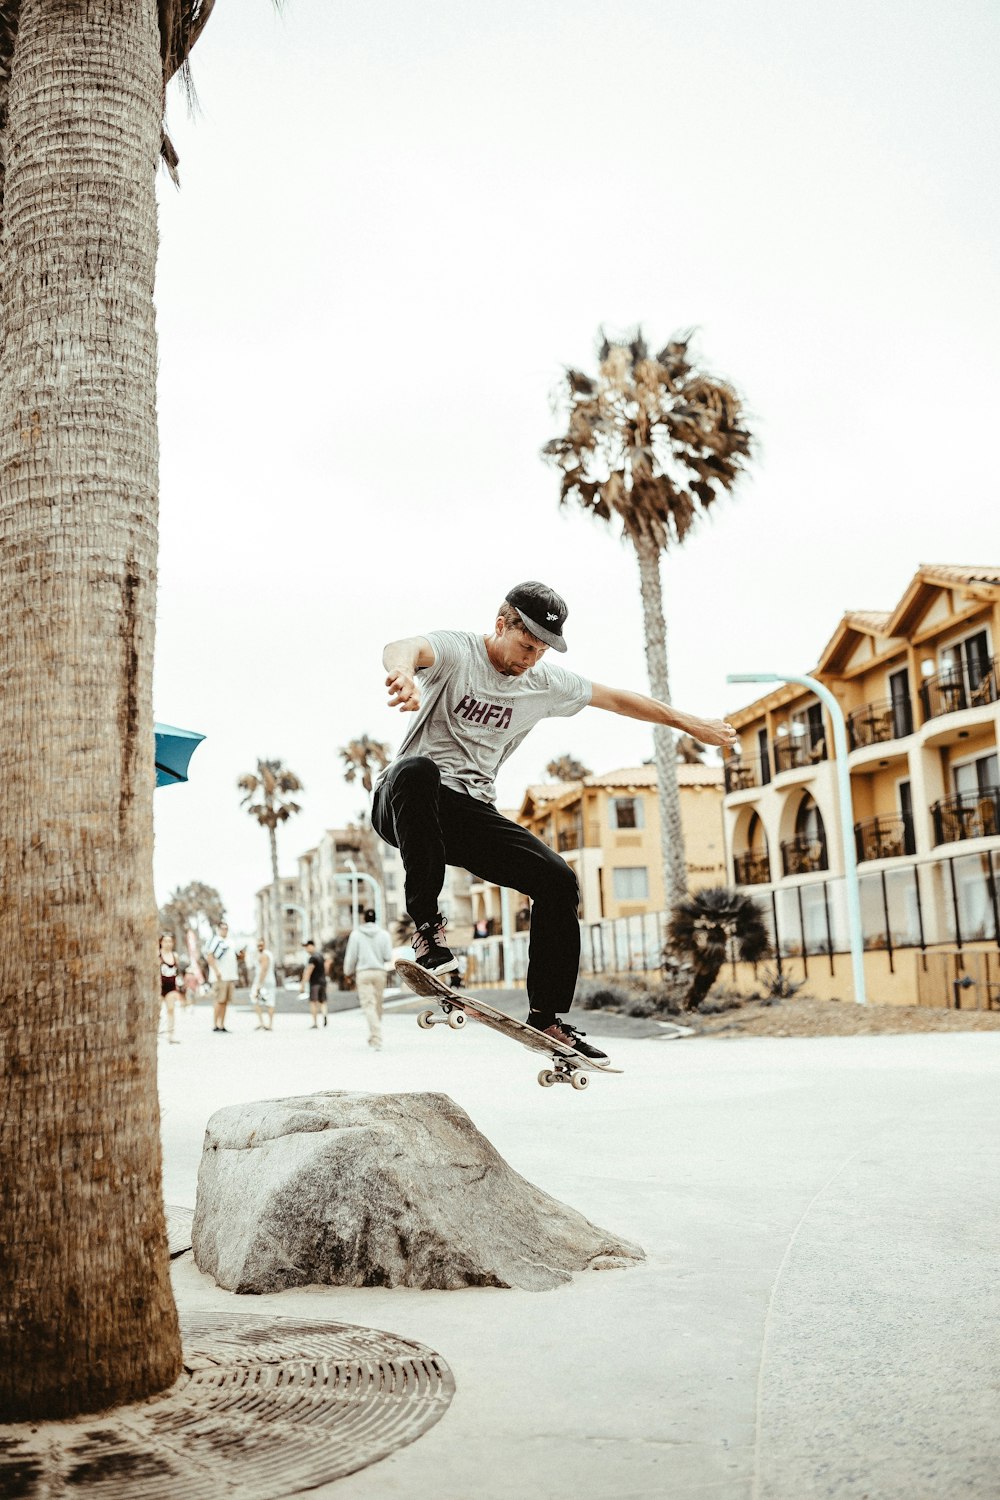 Mann spielt tagsüber Skateboard-Tricks auf dem Felsen